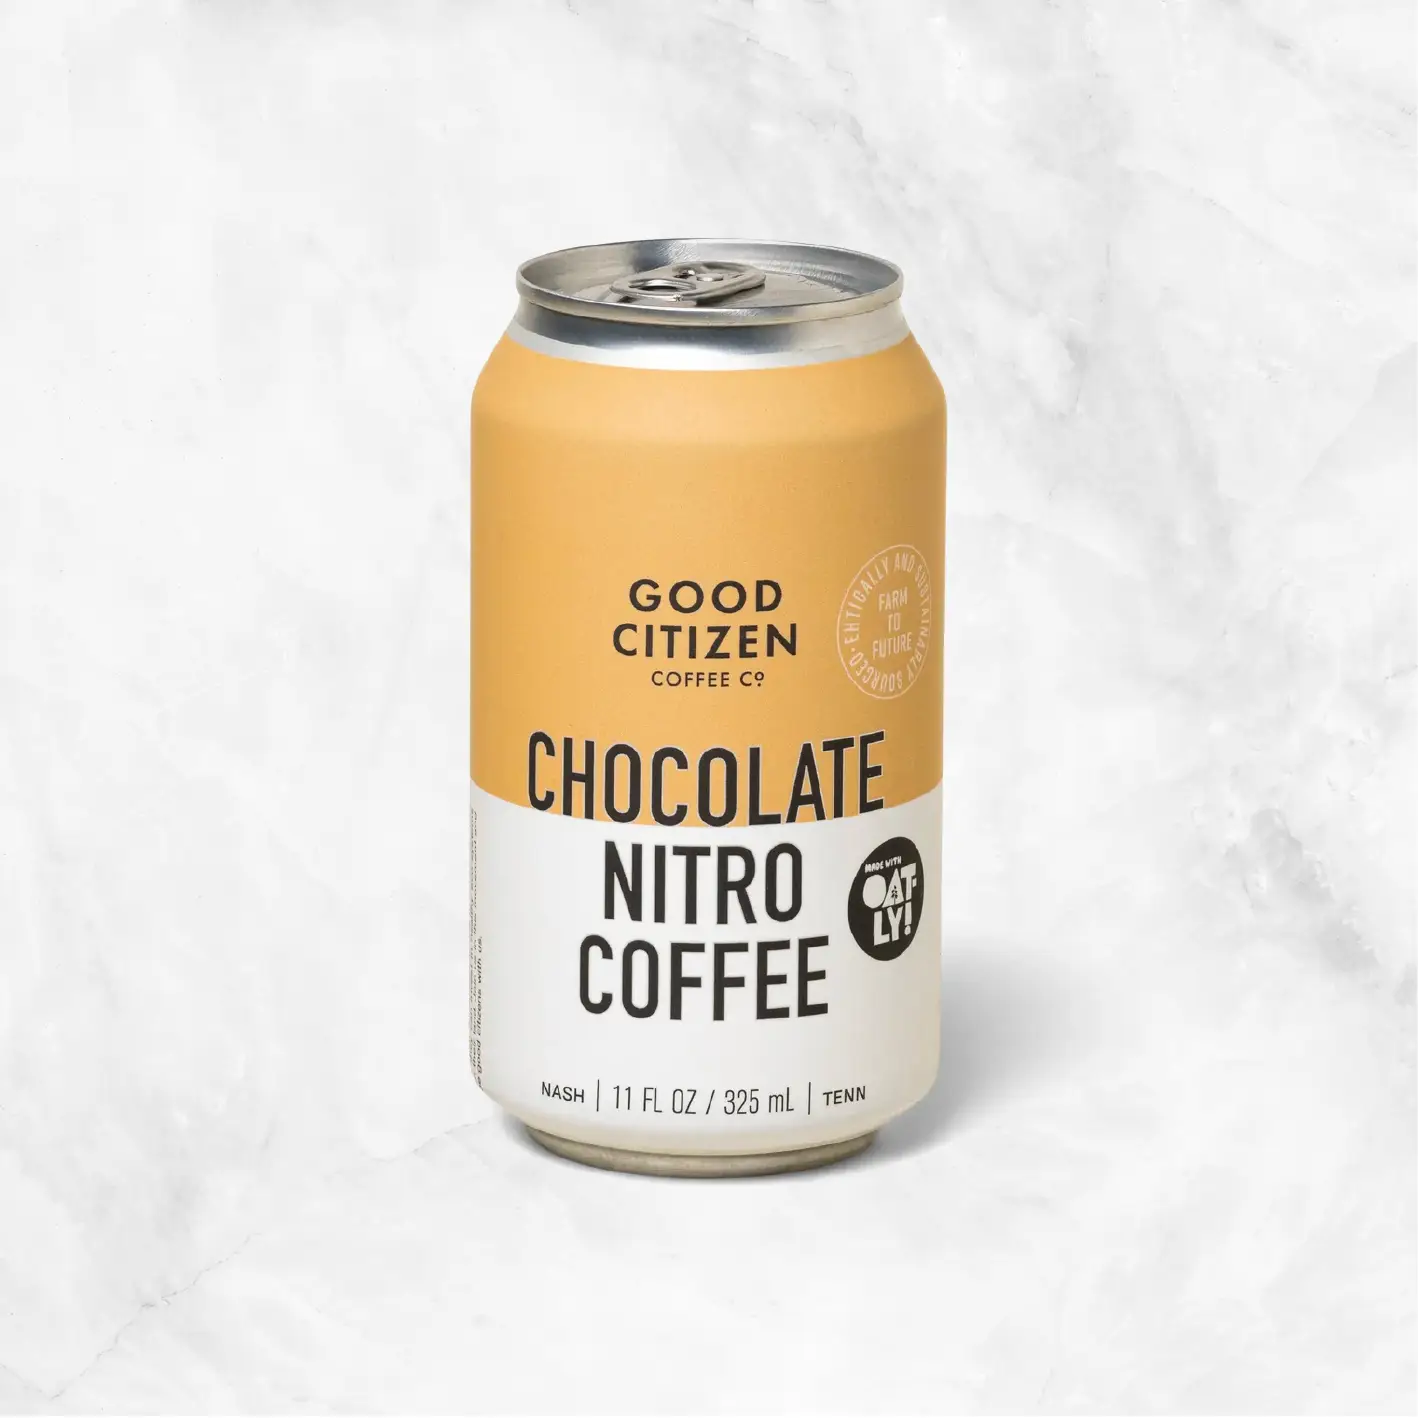 Chocolate Nitro Coffee Cans